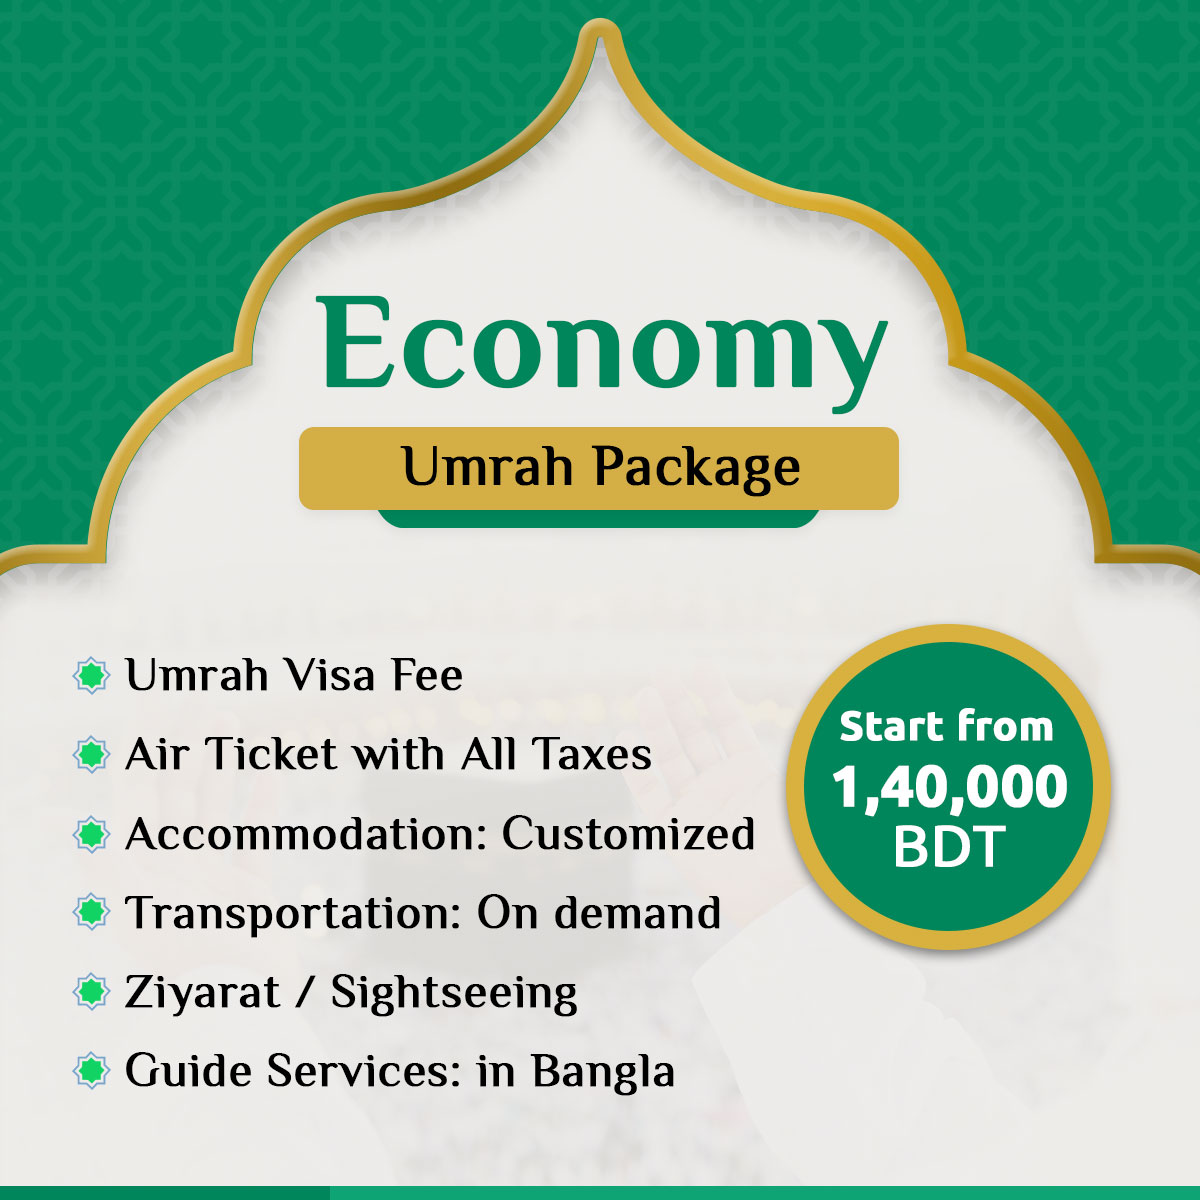 Economy 12 Days Umrah Package Makkah with Dubai & Jardan